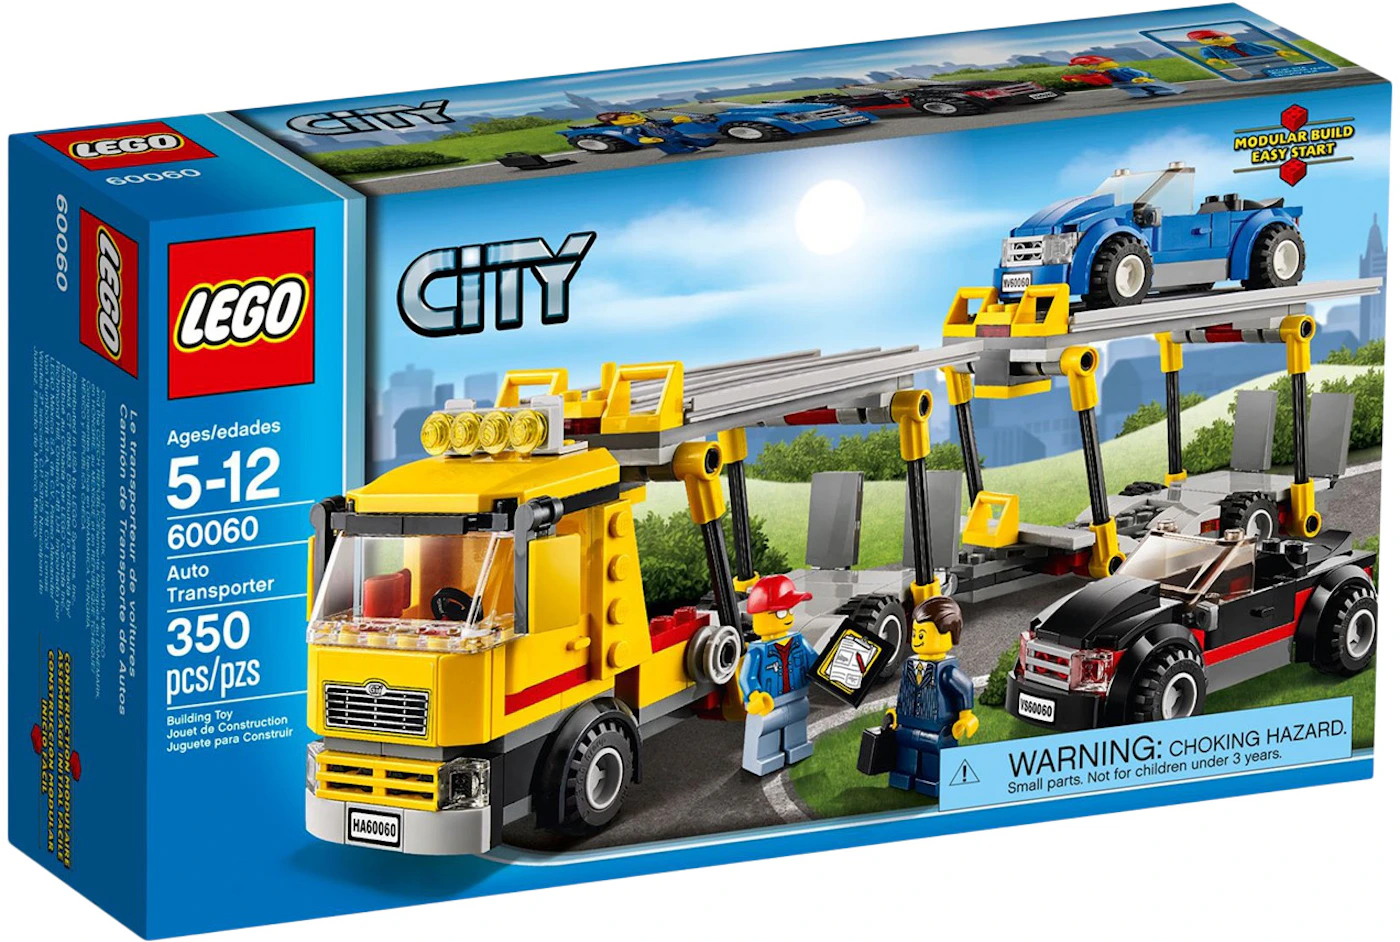 https://images.stockx.com/images/LEGO-City-Auto-Transporter-Set-60060.jpg?fit=fill&bg=FFFFFF&w=700&h=500&fm=webp&auto=compress&q=90&dpr=2&trim=color&updated_at=1643043518